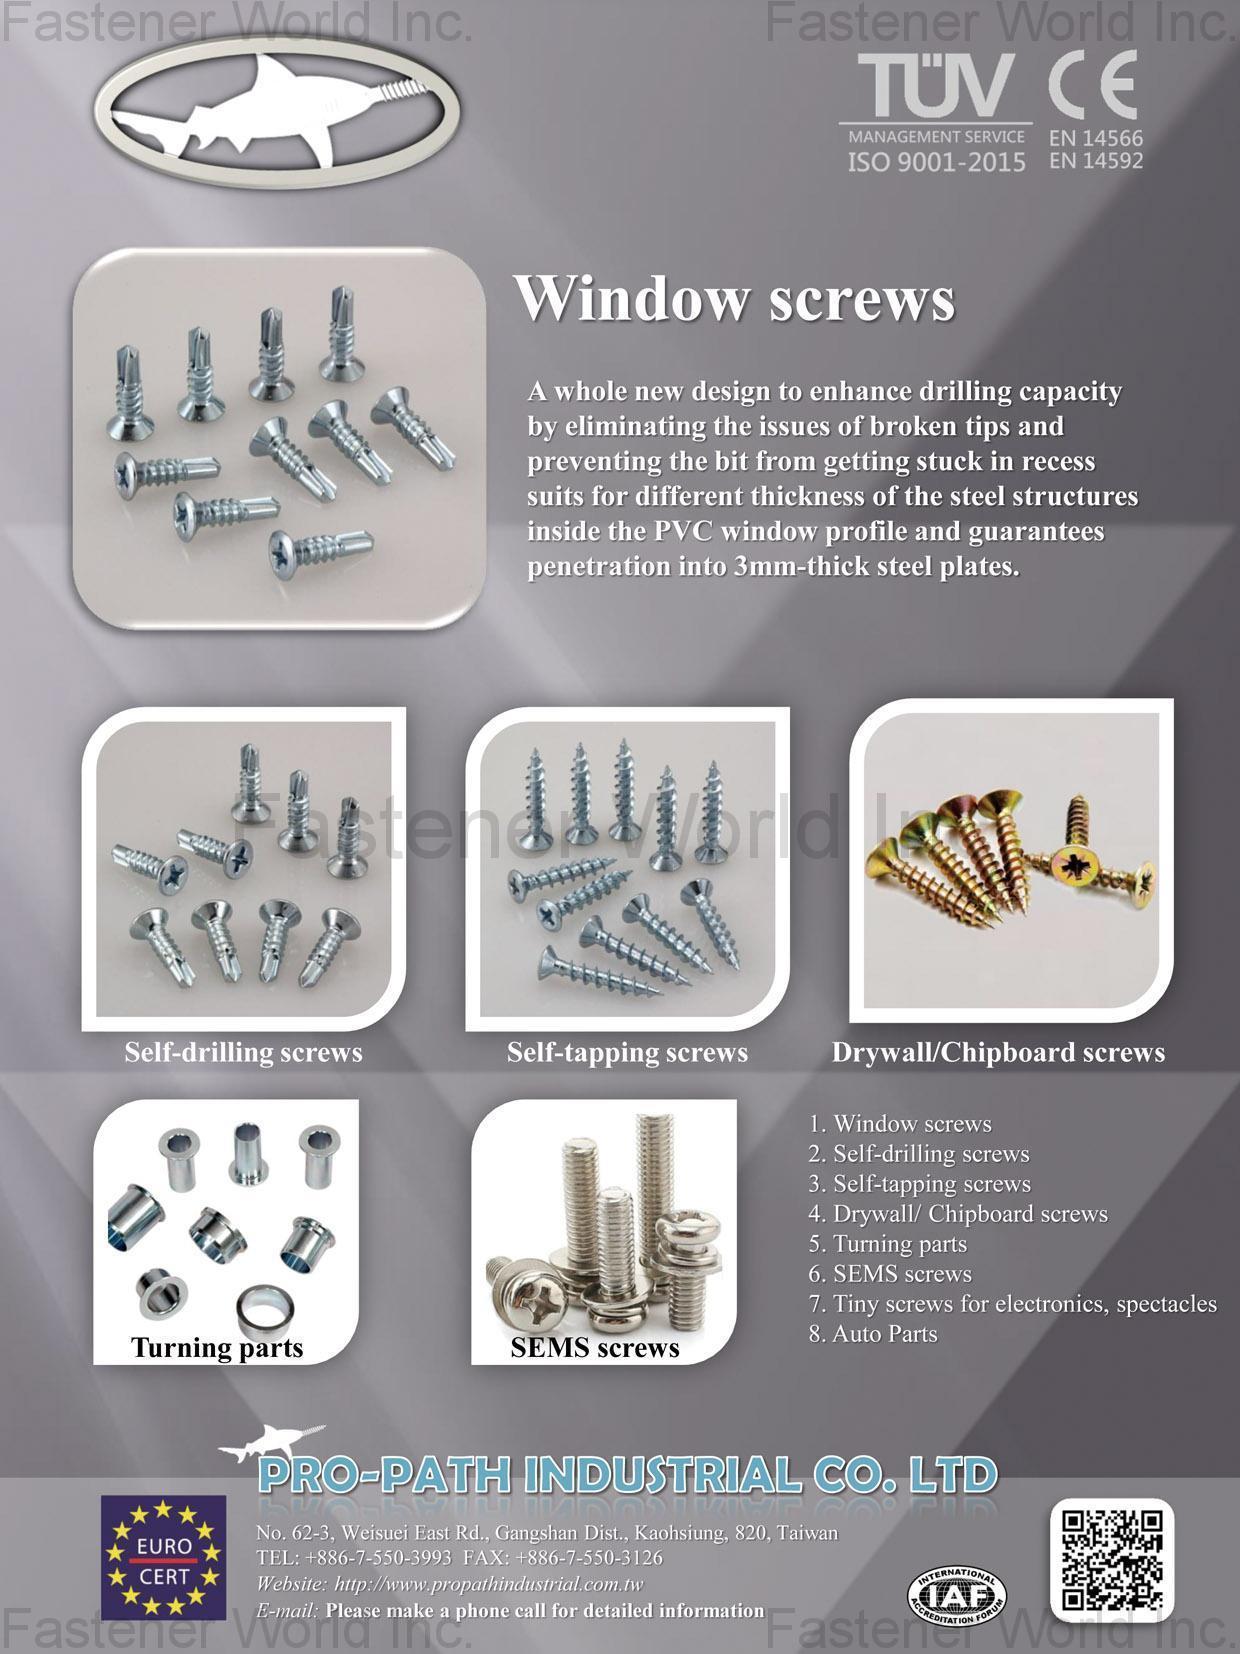 PRO-PATH INDUSTRIAL COMPANY, LTD.(propath) , Window Screws, Self-drilling Screws, Self-tapping Screws, Drywall Screws, Chipboard Screws, Turning Parts, Sems Screws